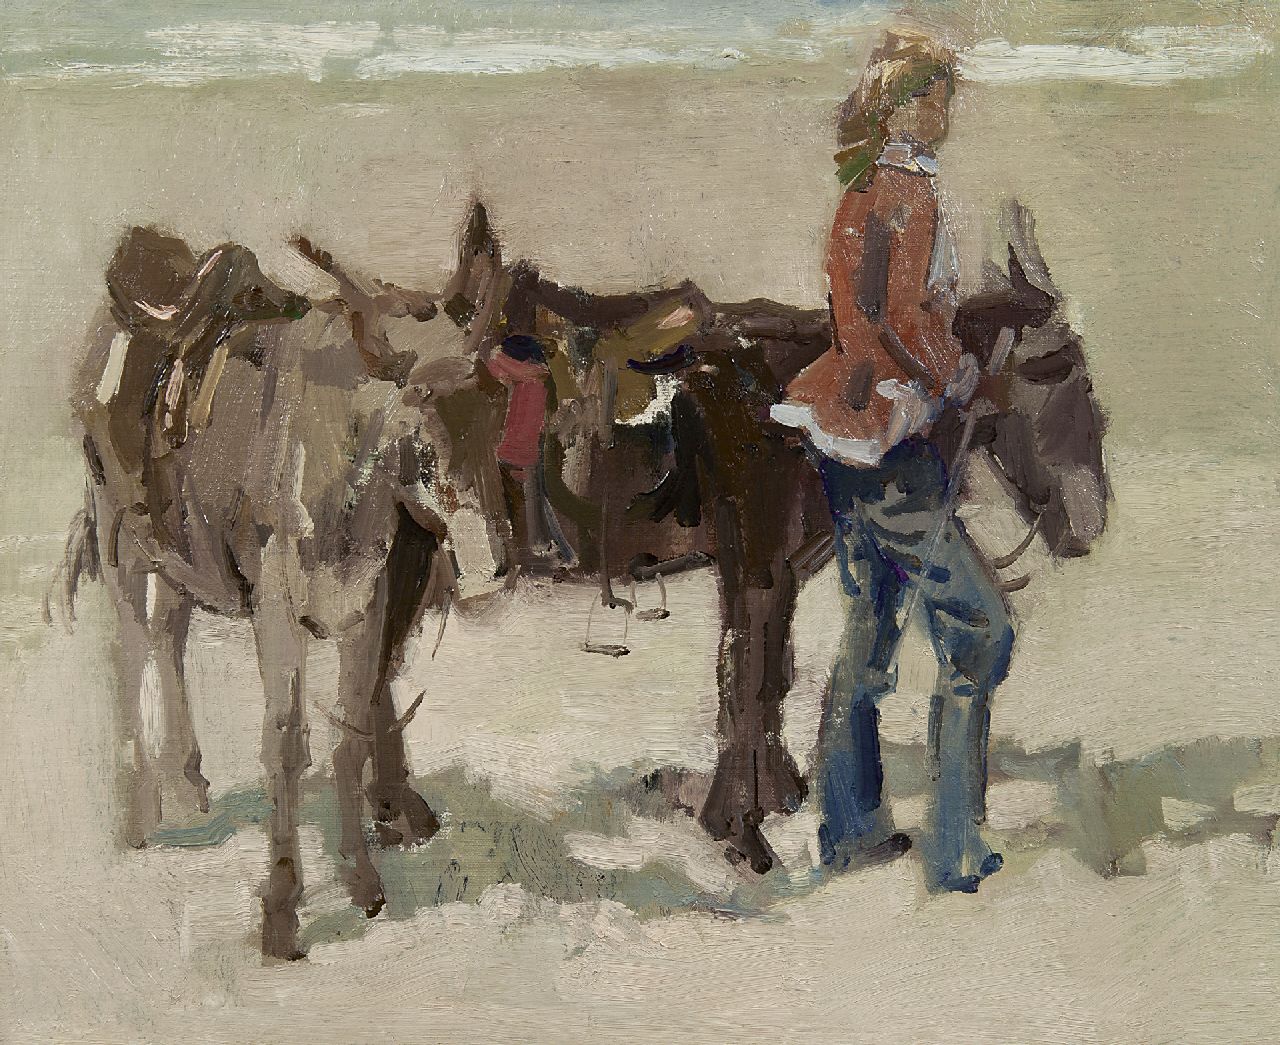 Boer H. de | Hessel de Boer, Meisje met ezels op het strand, olieverf op doek 46,0 x 55,8 cm